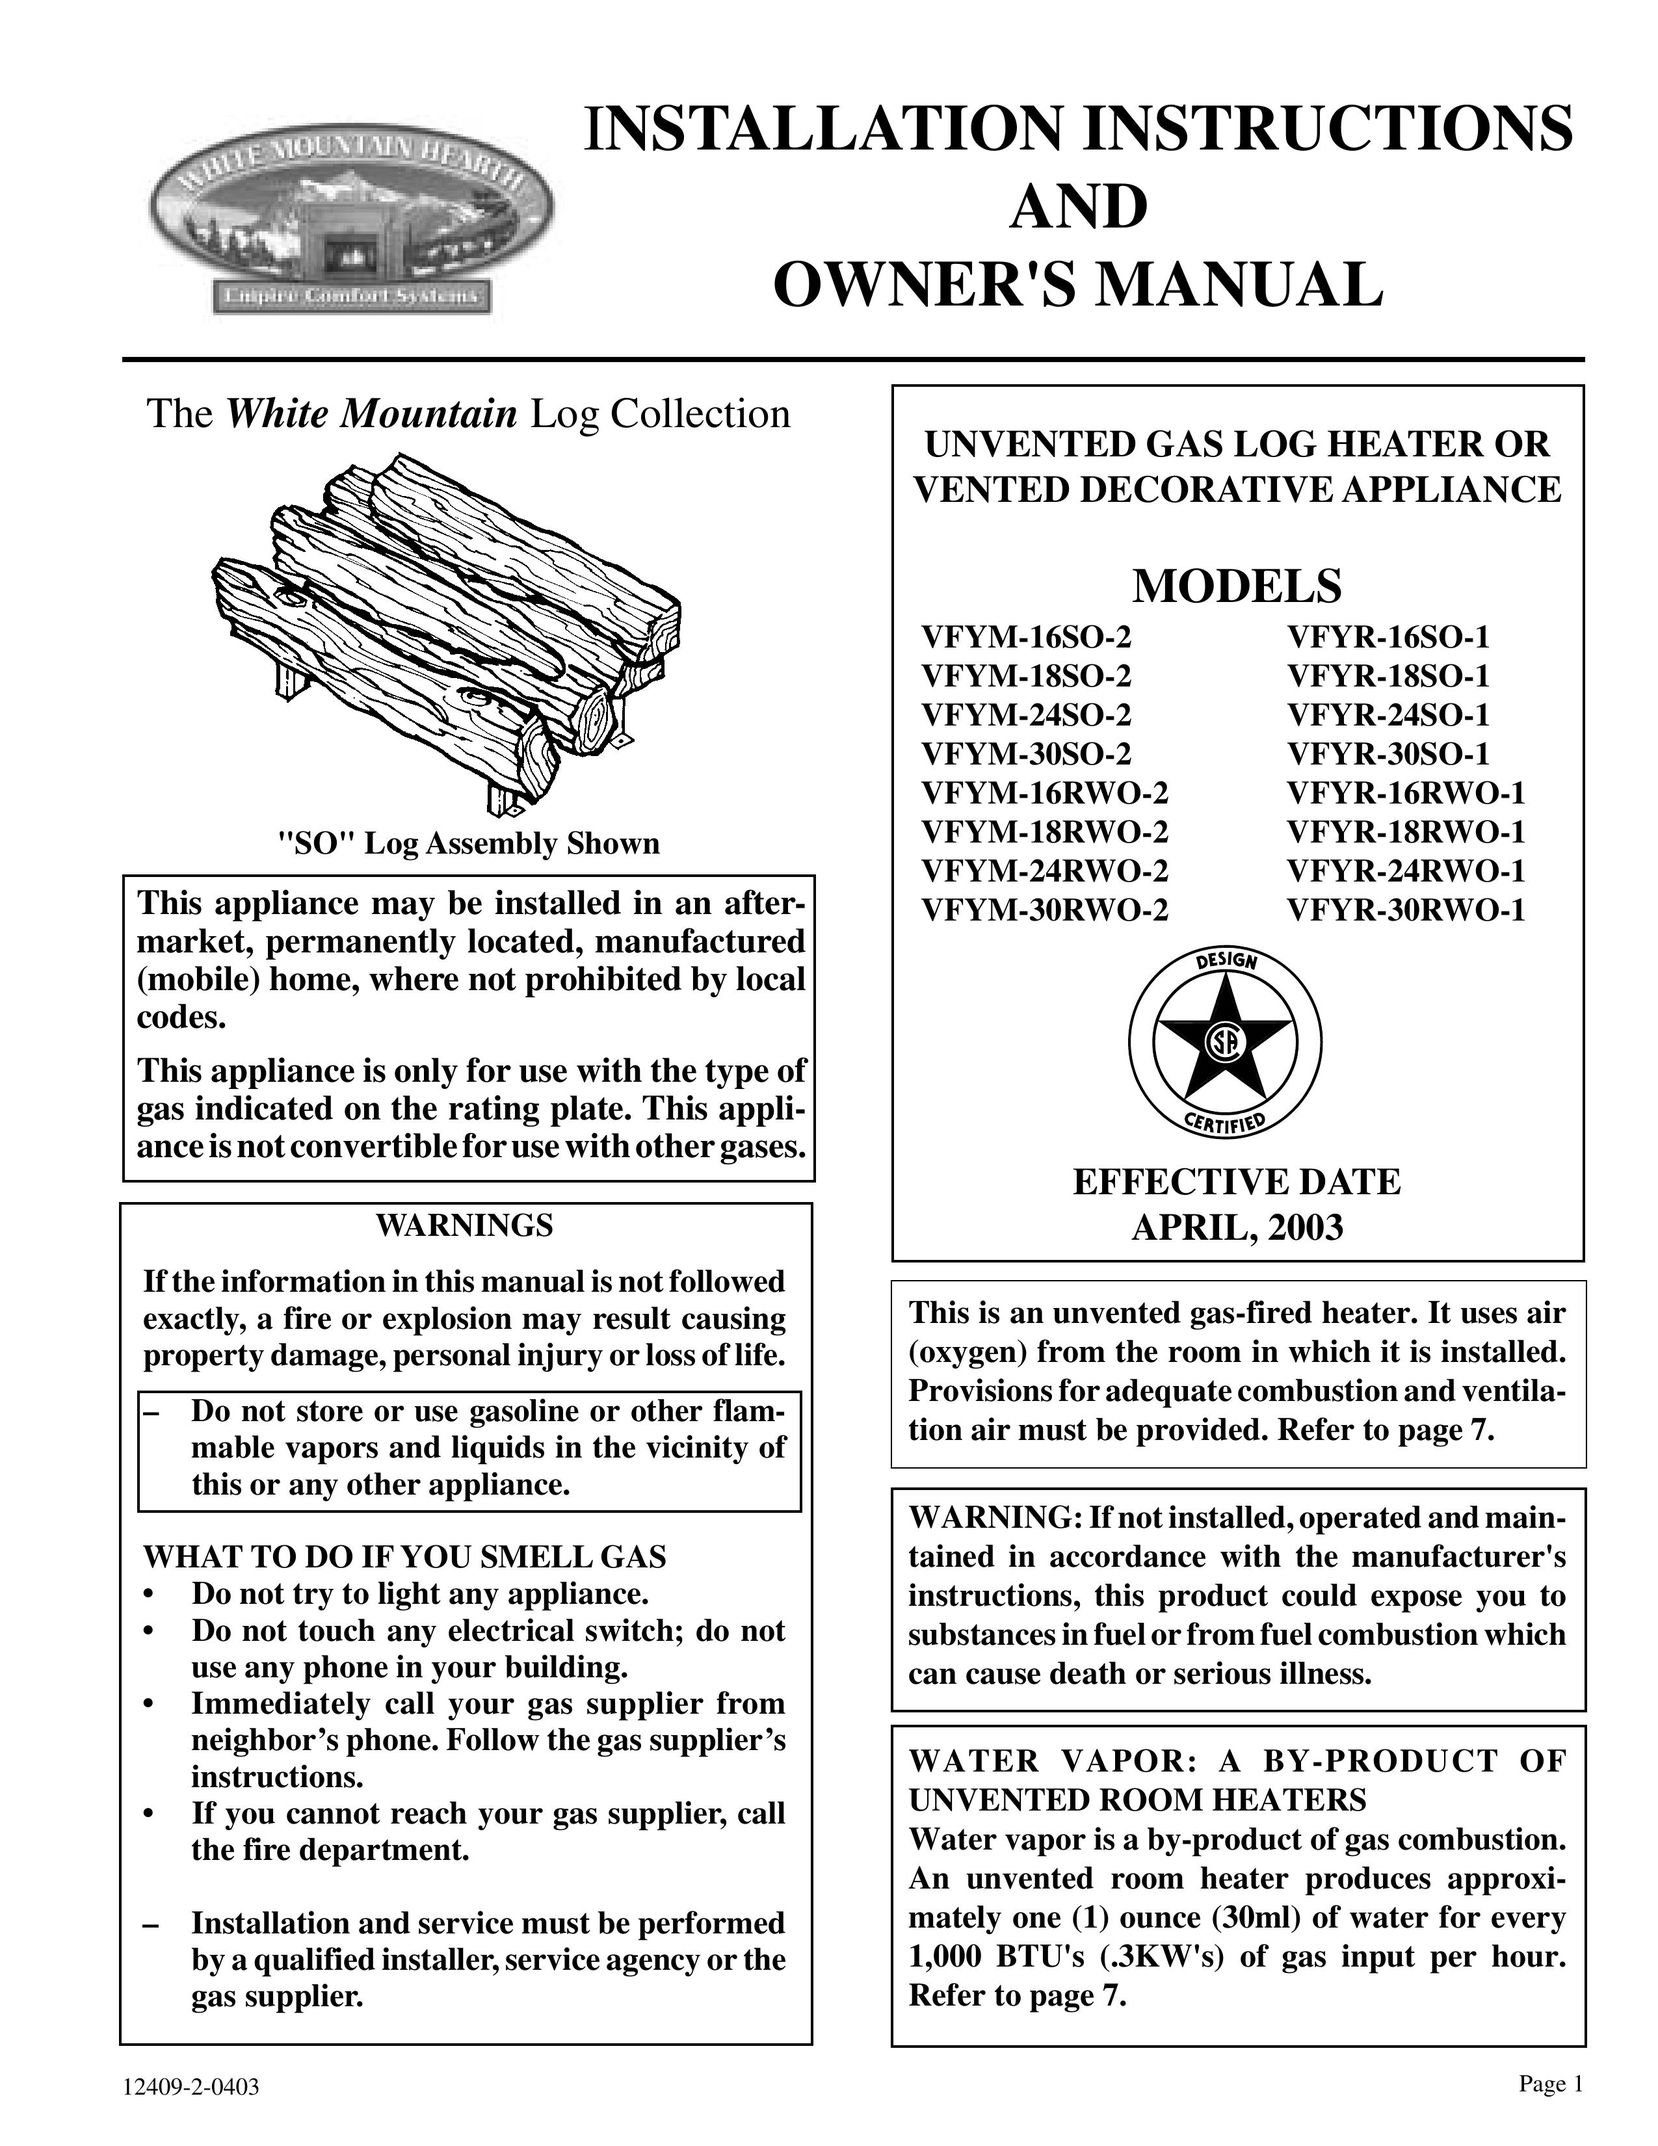 Empire Comfort Systems VFYR-24RWO-1 Water Heater User Manual